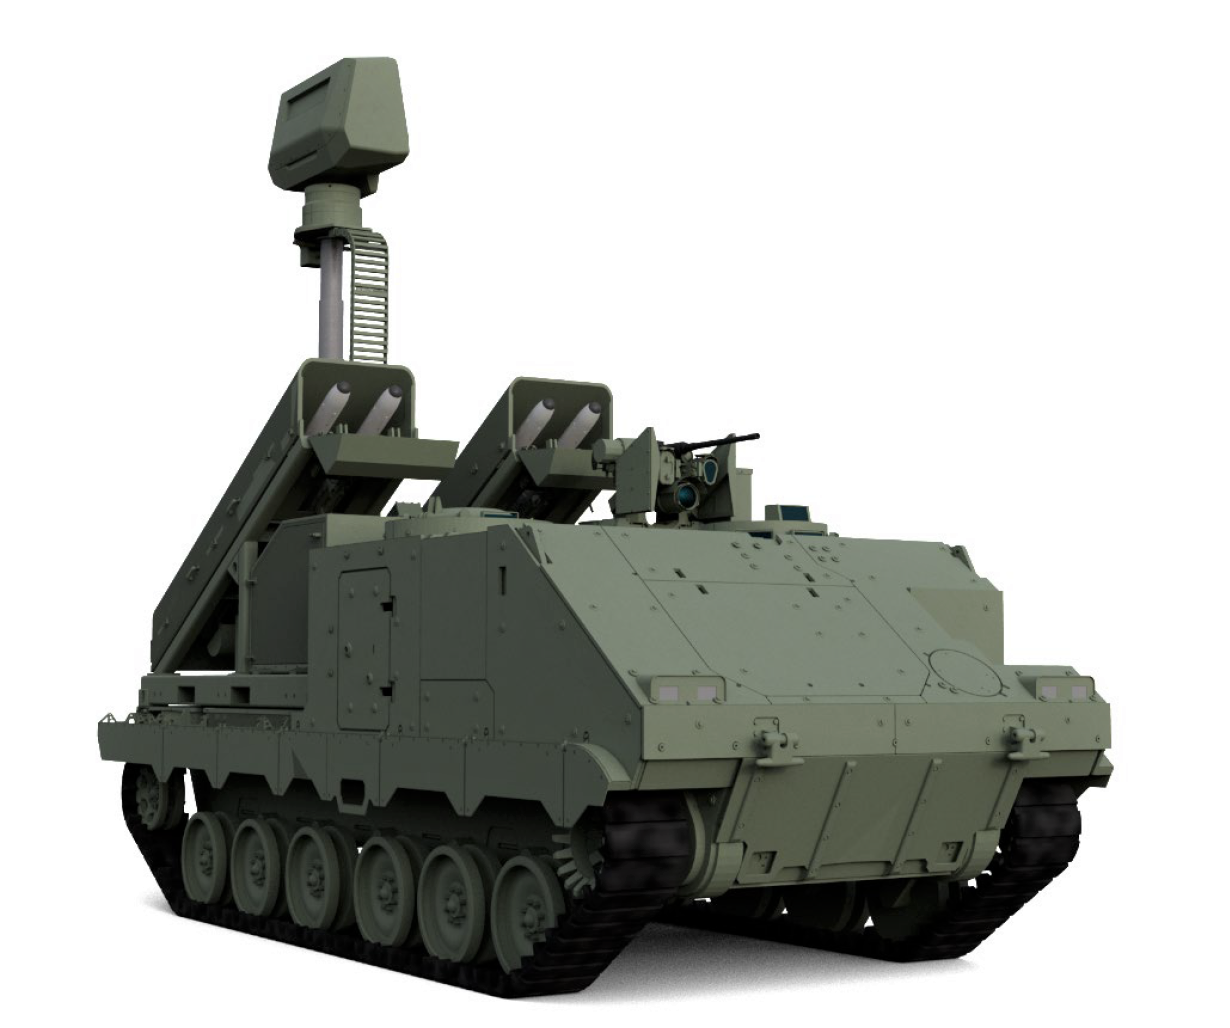 ACSV G5 in a short-range SAM version, Defense Express